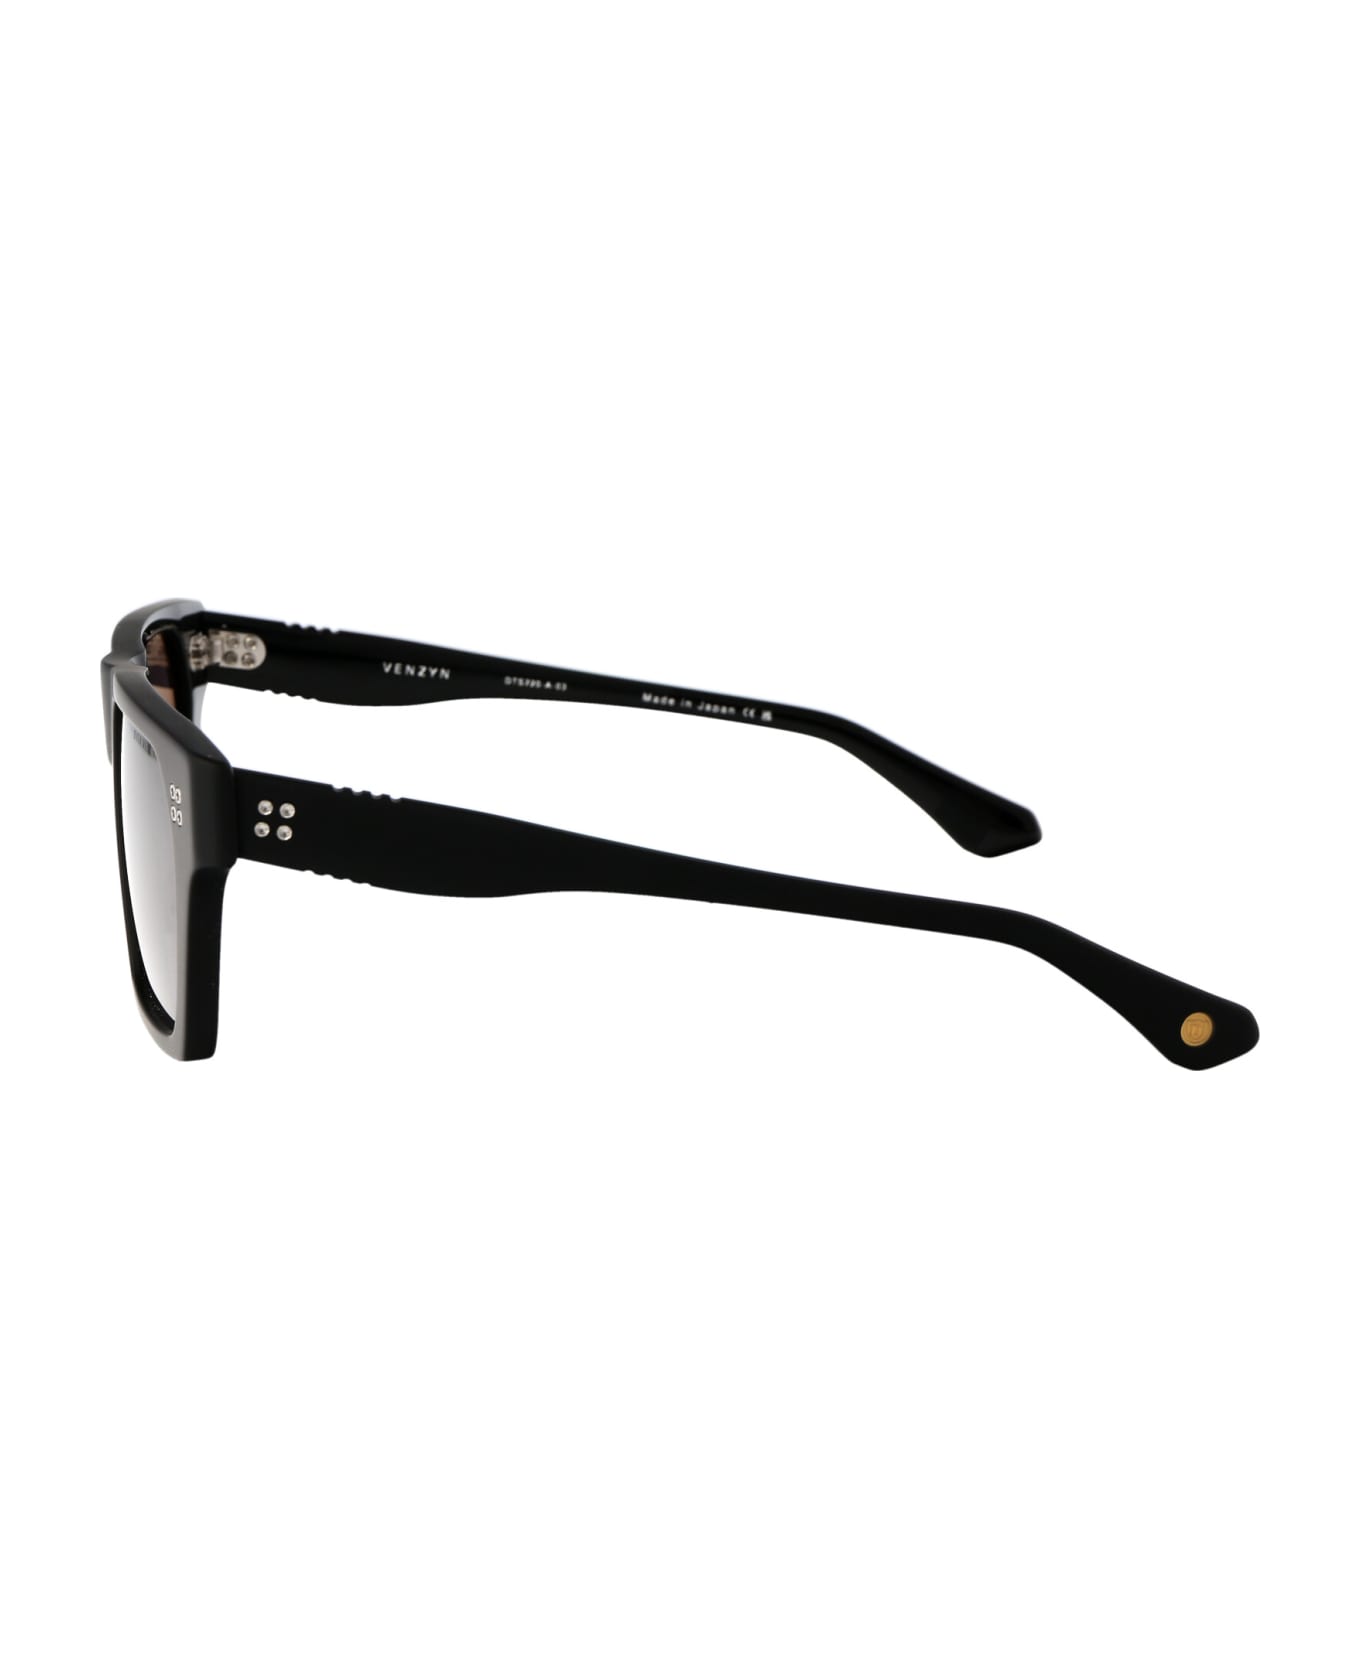 Dita Venzyn Sunglasses - 03 BLACK W/ GREY